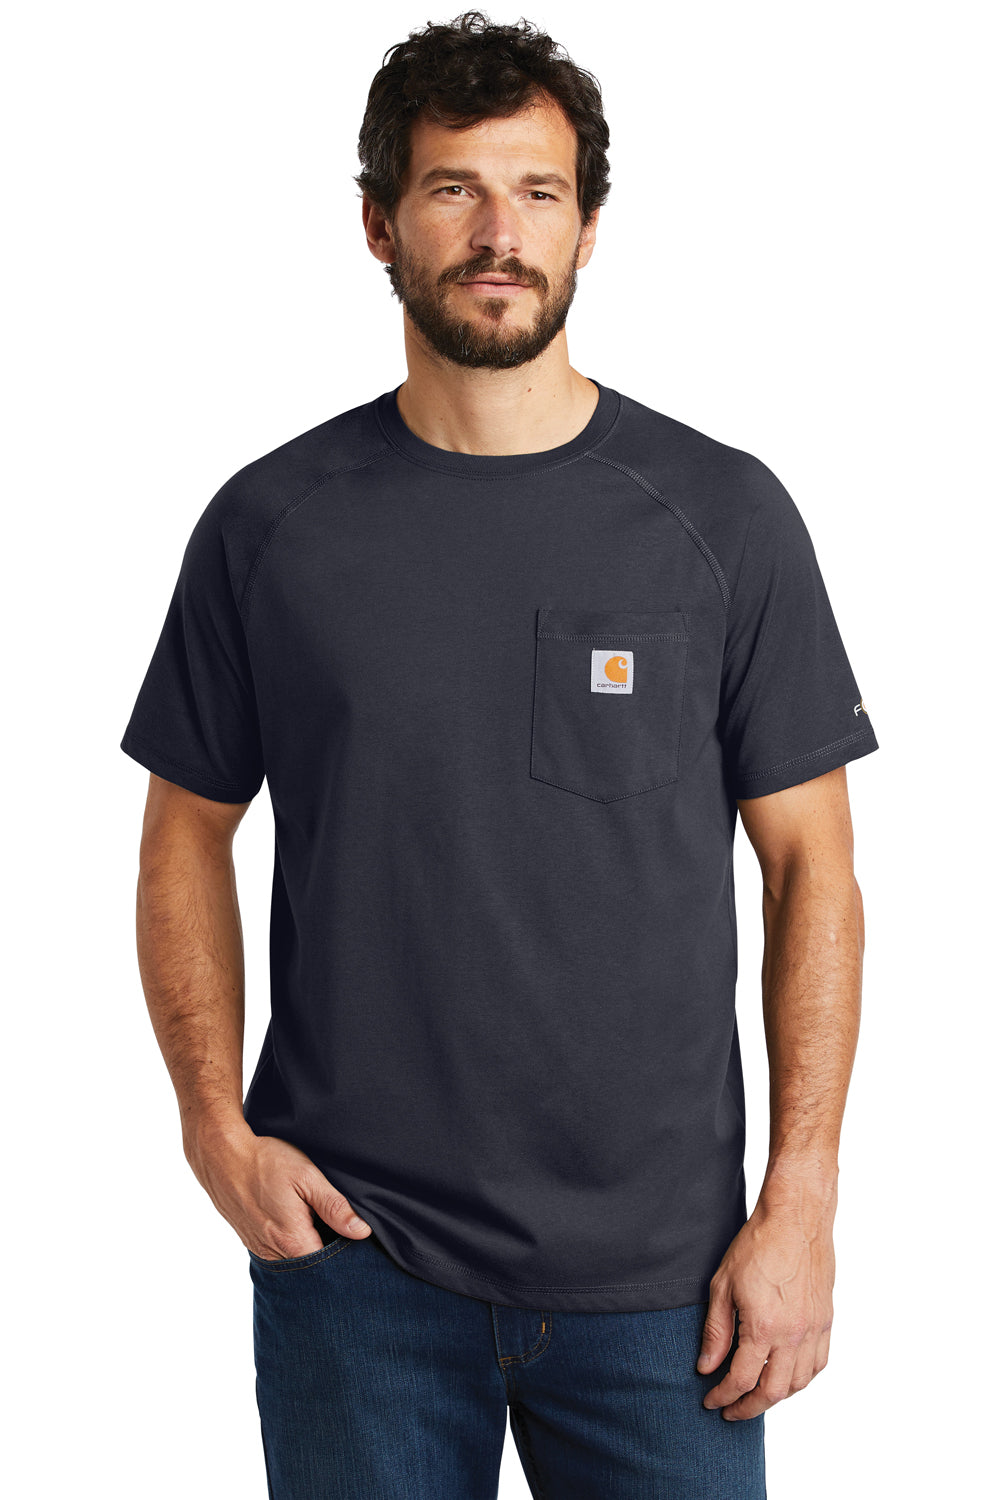 Carhartt CT100410 Mens Delmont Moisture Wicking Short Sleeve Crewneck T-Shirt w/ Pocket Navy Blue Front